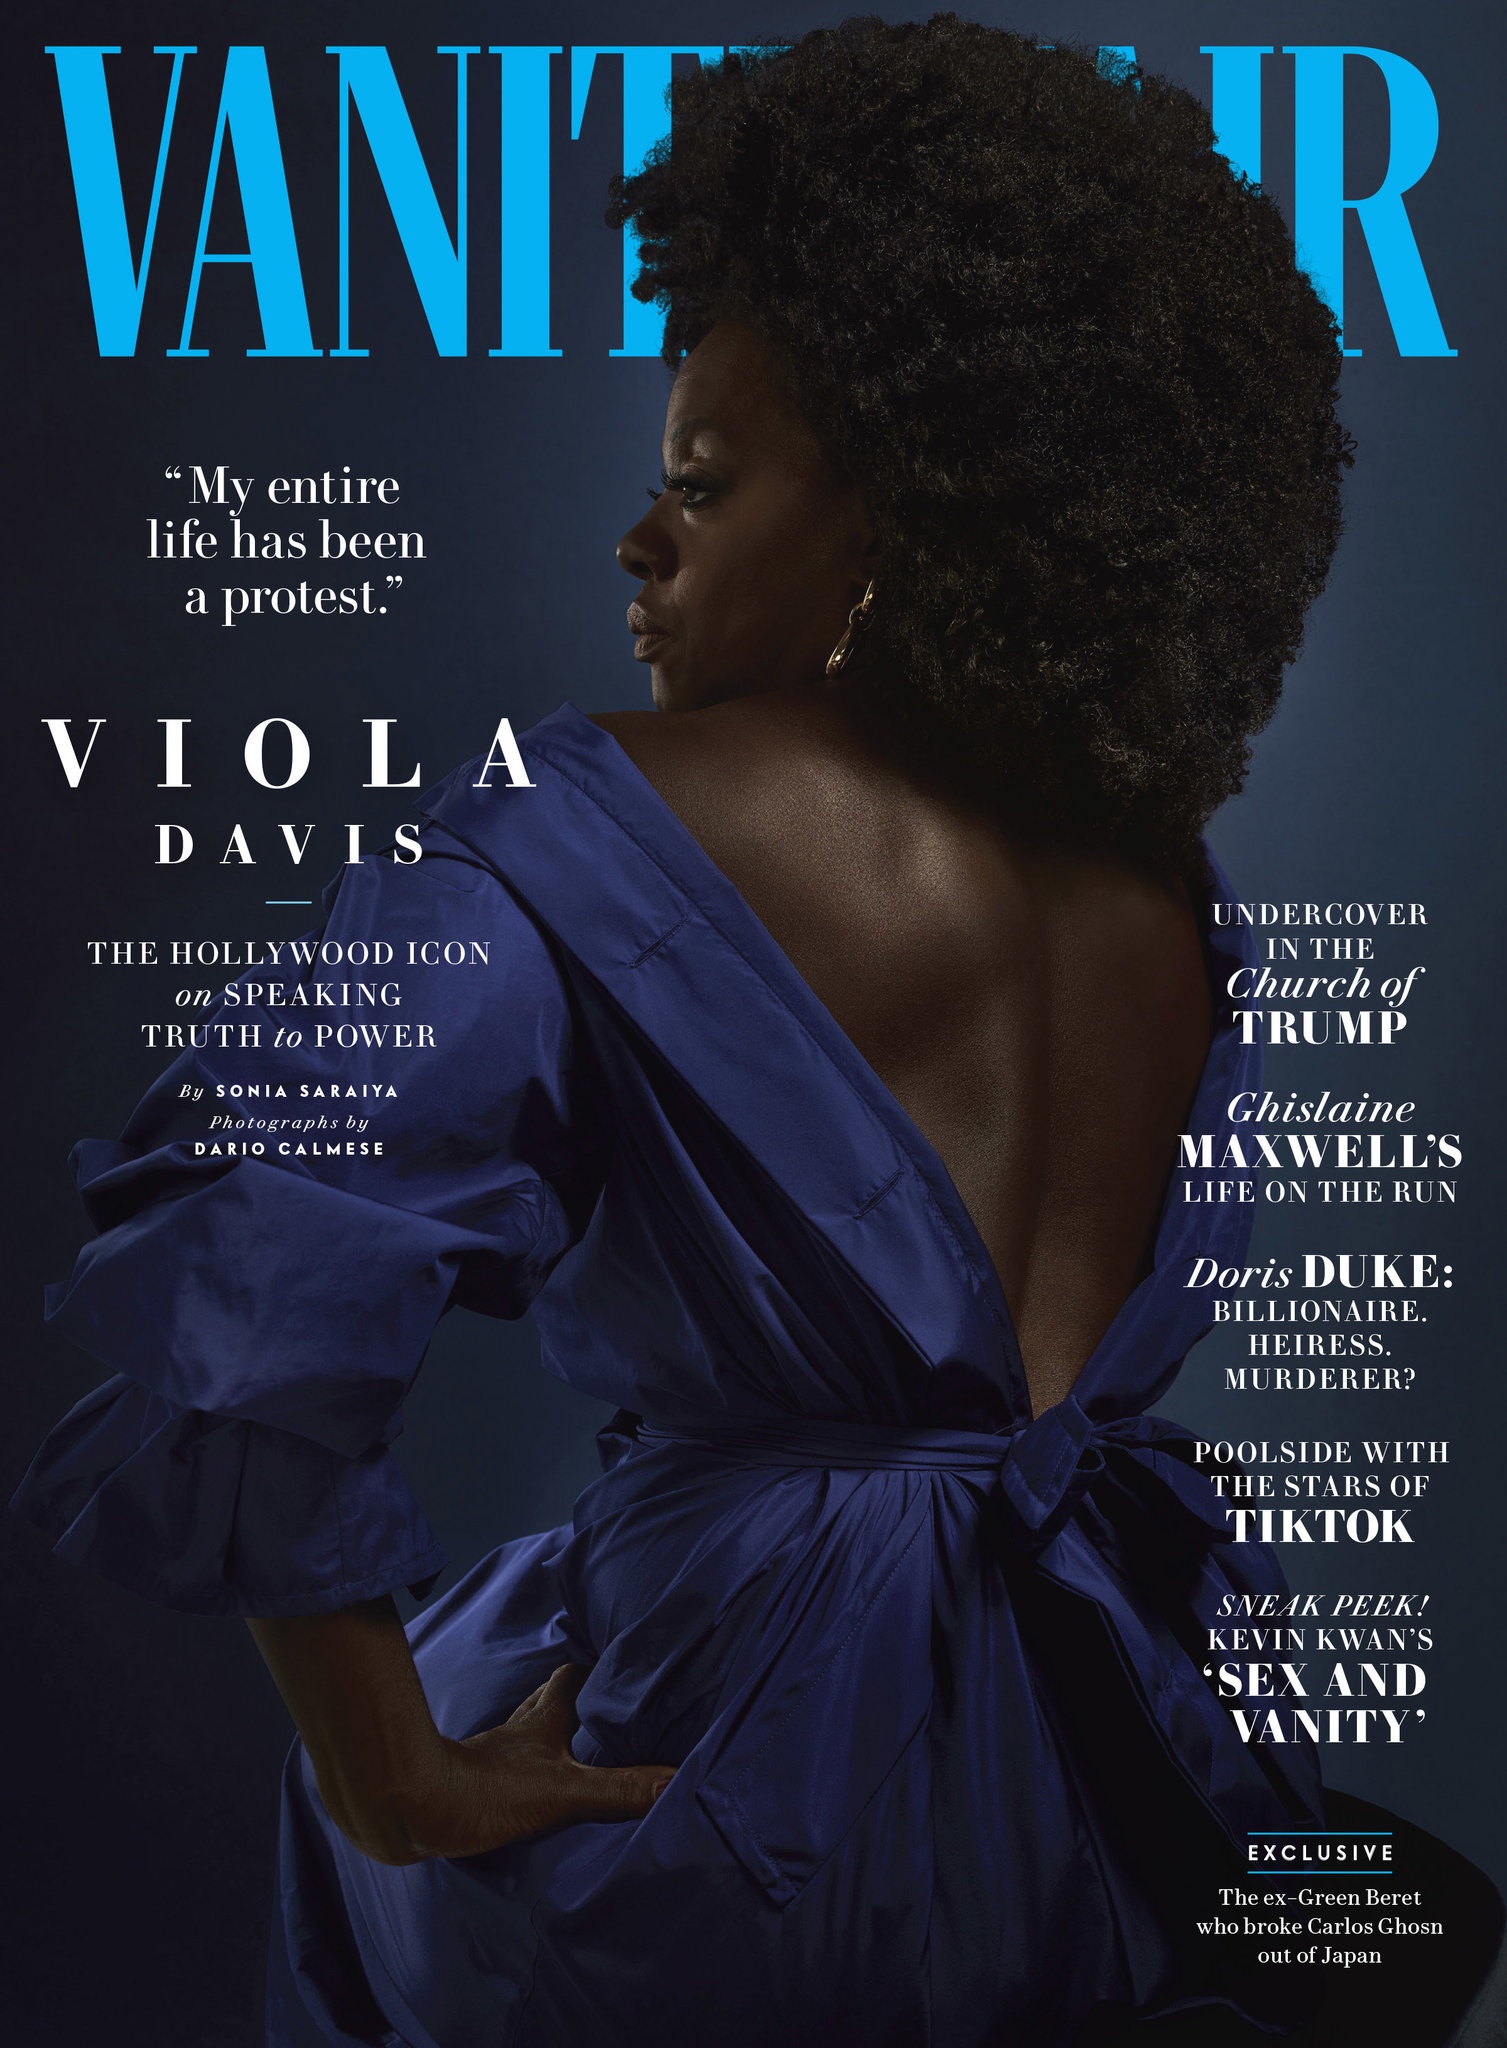 Dario Calmese's cover shot of Viola Davis for Vanity Fair
